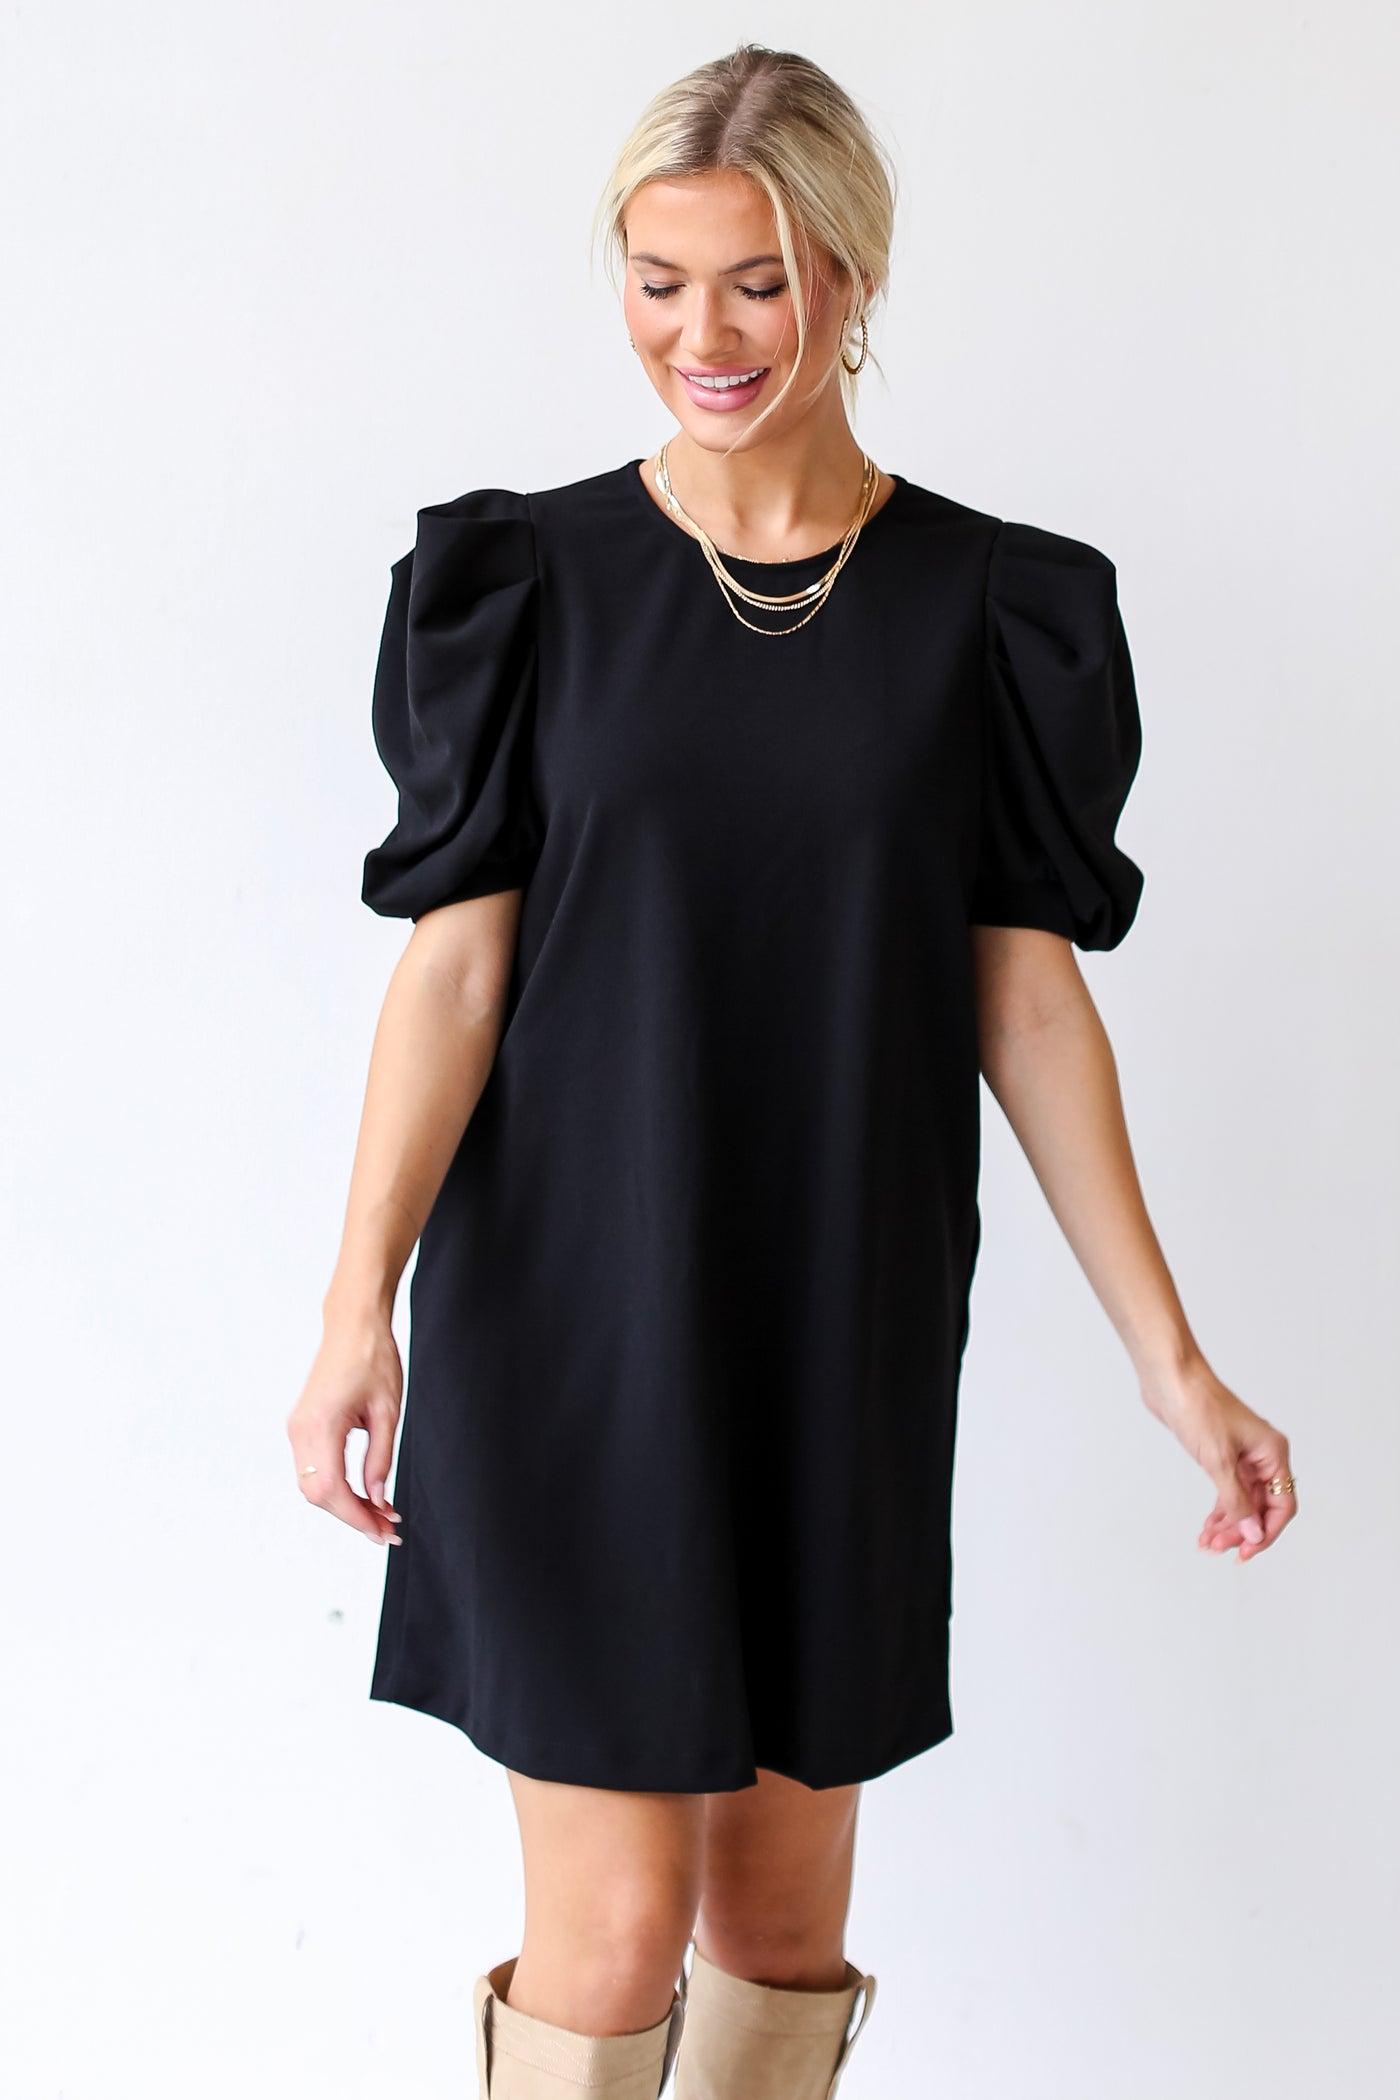 dress up model wearing a black Puff Sleeve Mini Dress